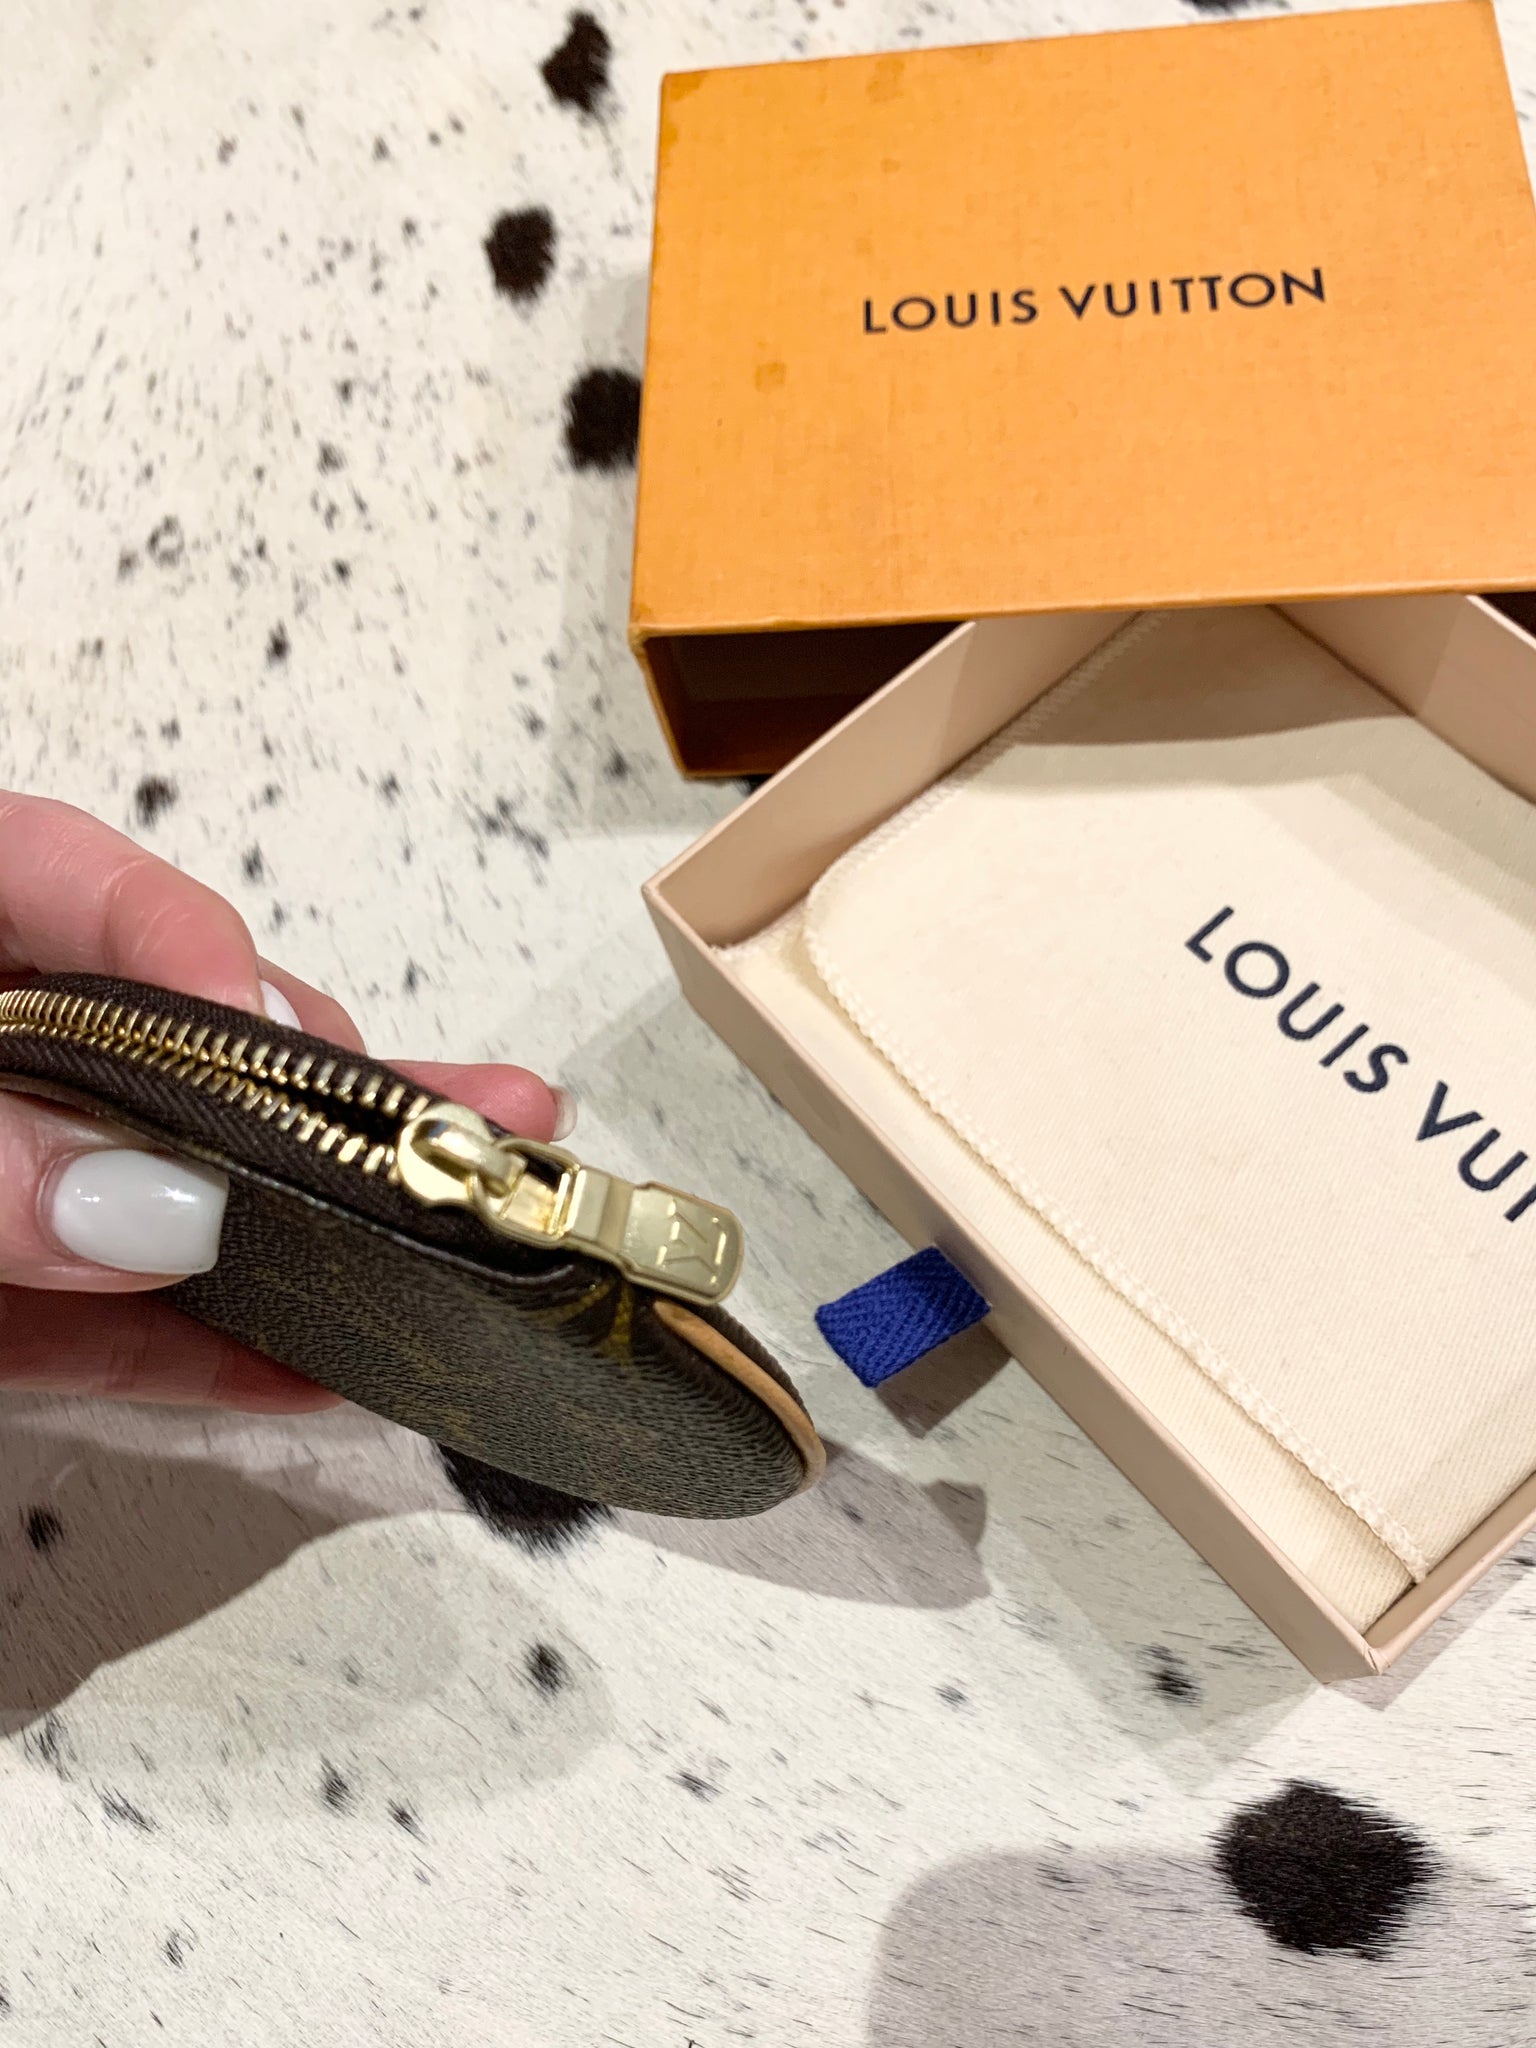 Louis Vuitton Round Coin Purse Monogram Vivienne Venice Christmas Edit –  Coco Approved Studio